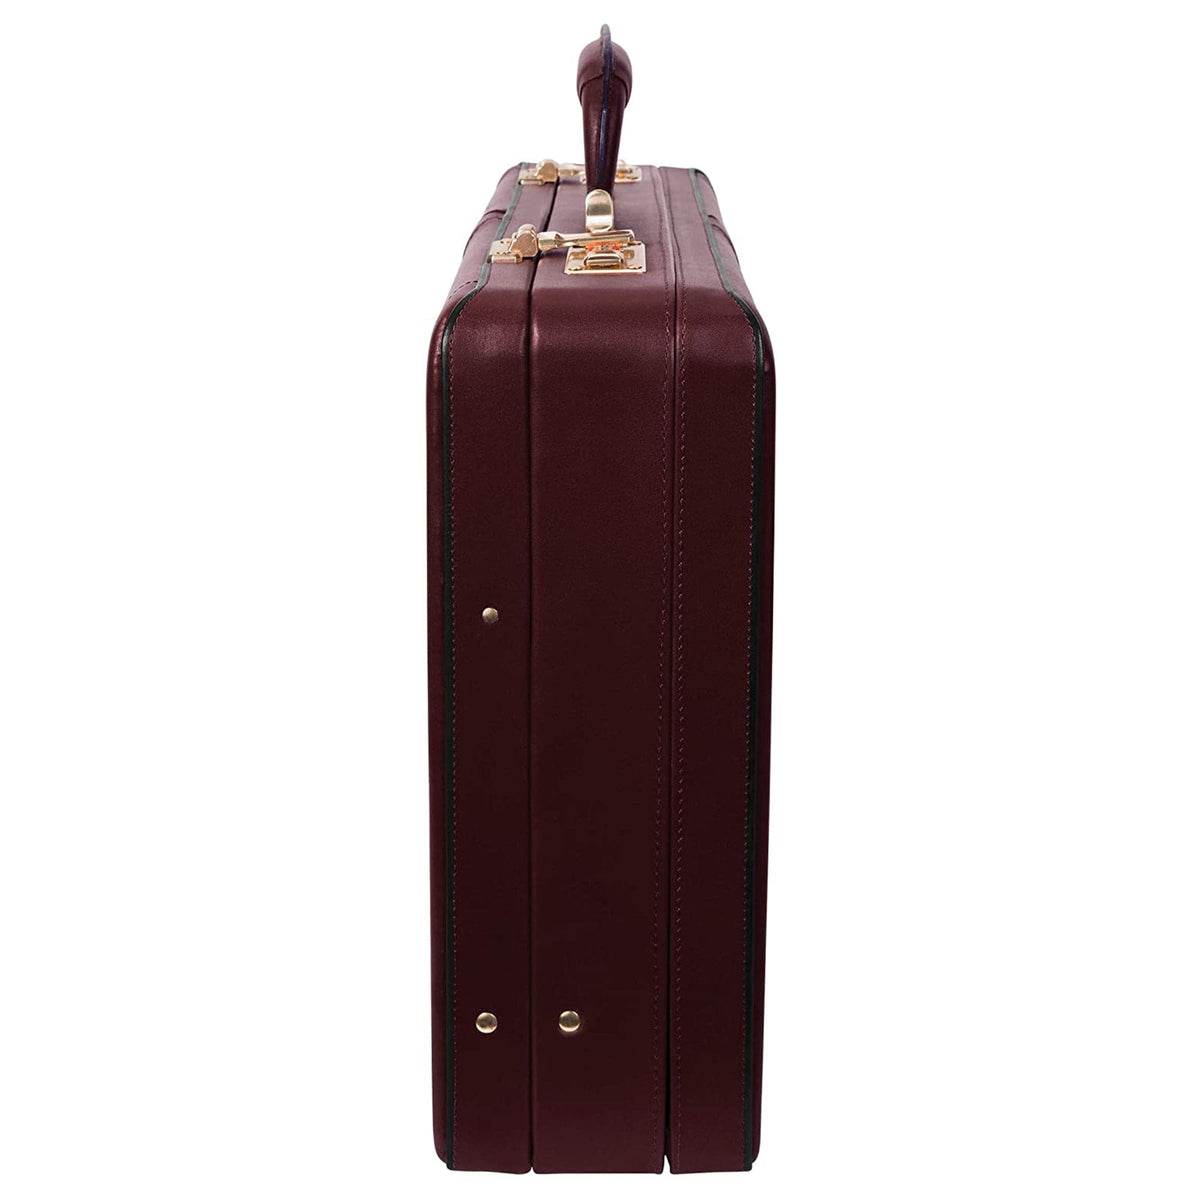 McKlein USA Harper 4.5" Leather  Expandable Attache Briefcase